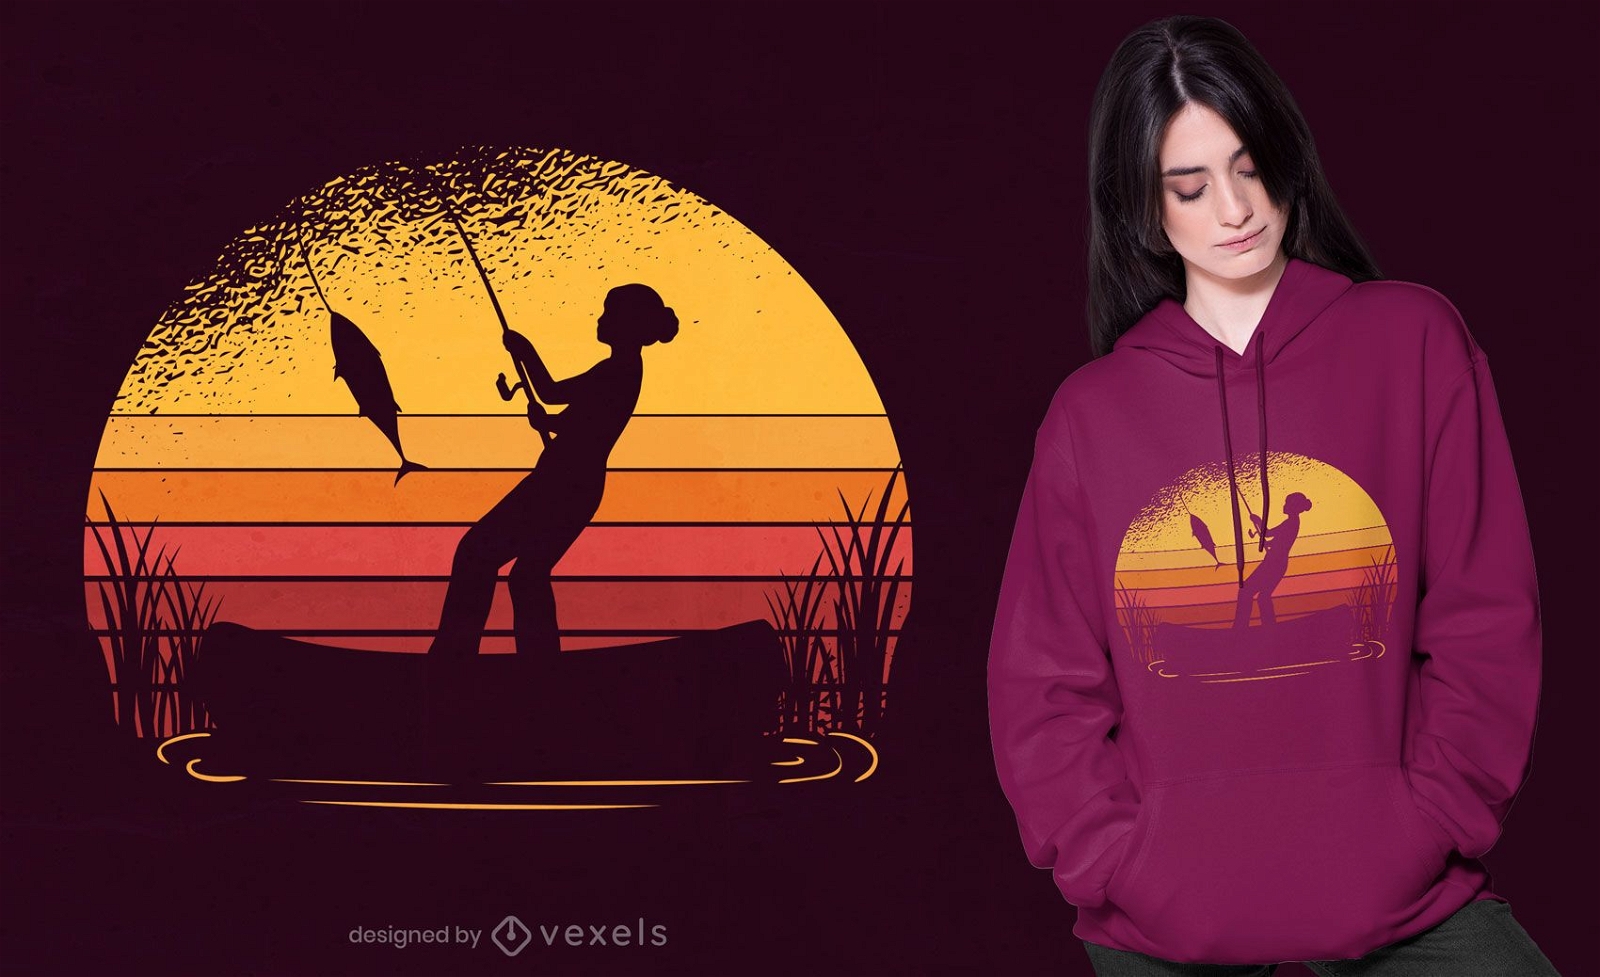 https://images.vexels.com/content/224480/preview/fishing-sunset-t-shirt-design-546e5b.png